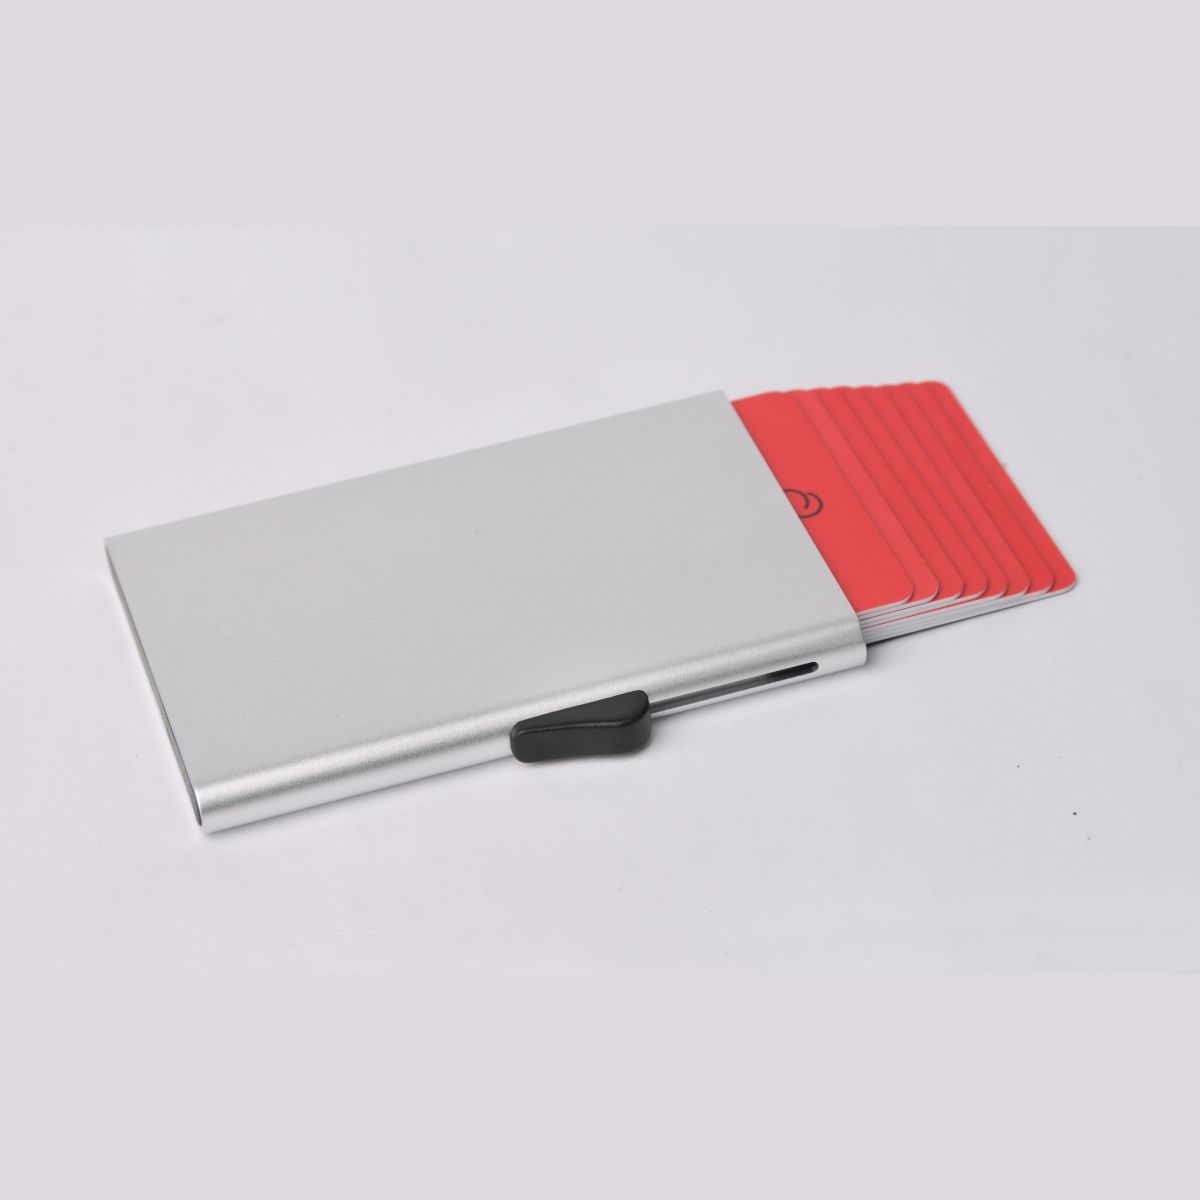 C-Secure Slim Aluminum Card Holder - Silver